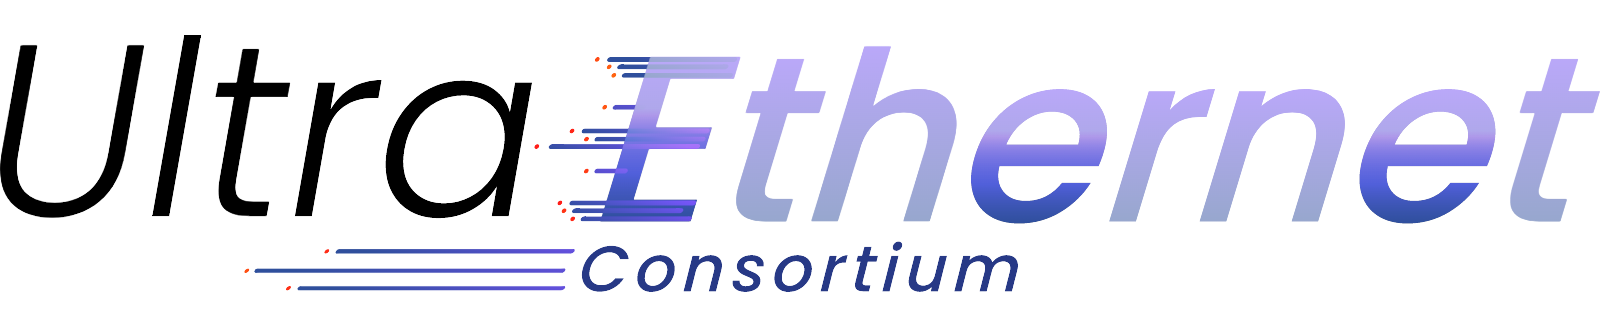 Ultra Ethernet Consortium logo